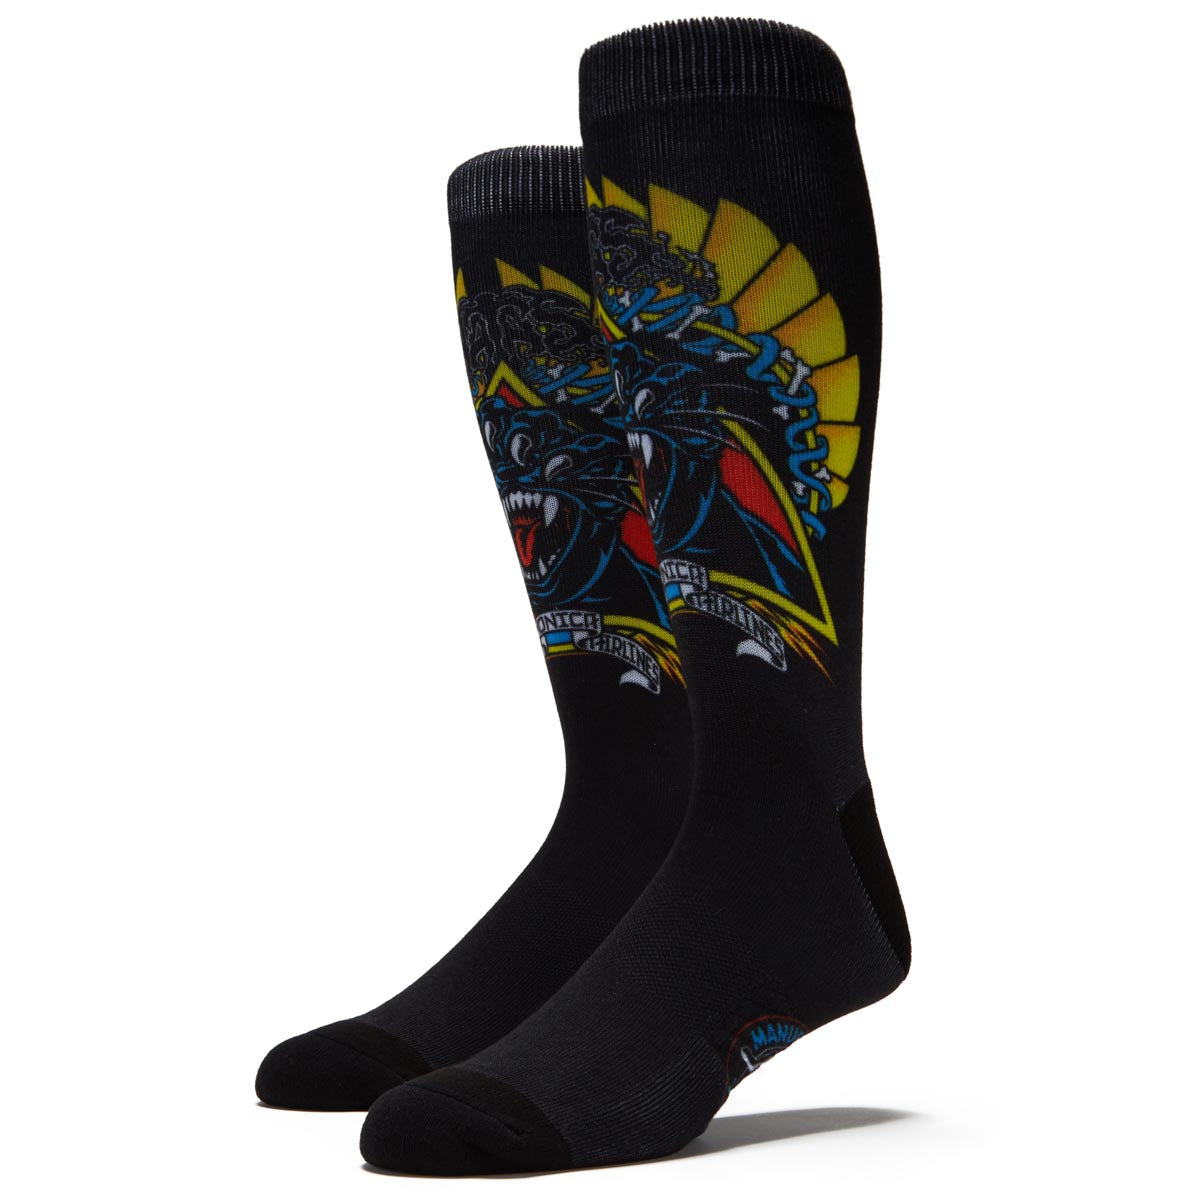 Santa Cruz Natas Screaming Panther Dress Socks - Black image 1